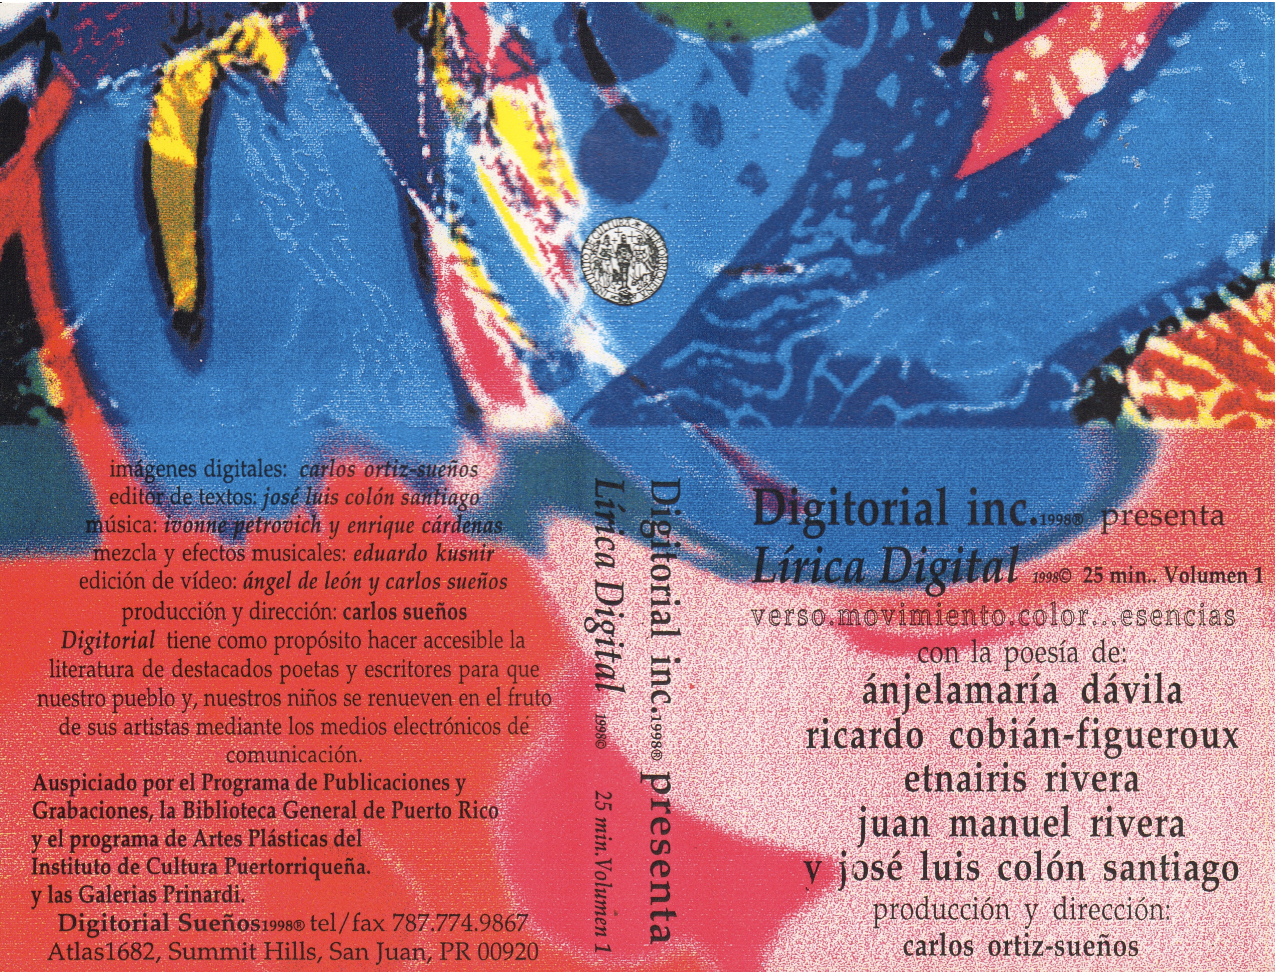 Digitorial Inc. presenta Lírica Digital